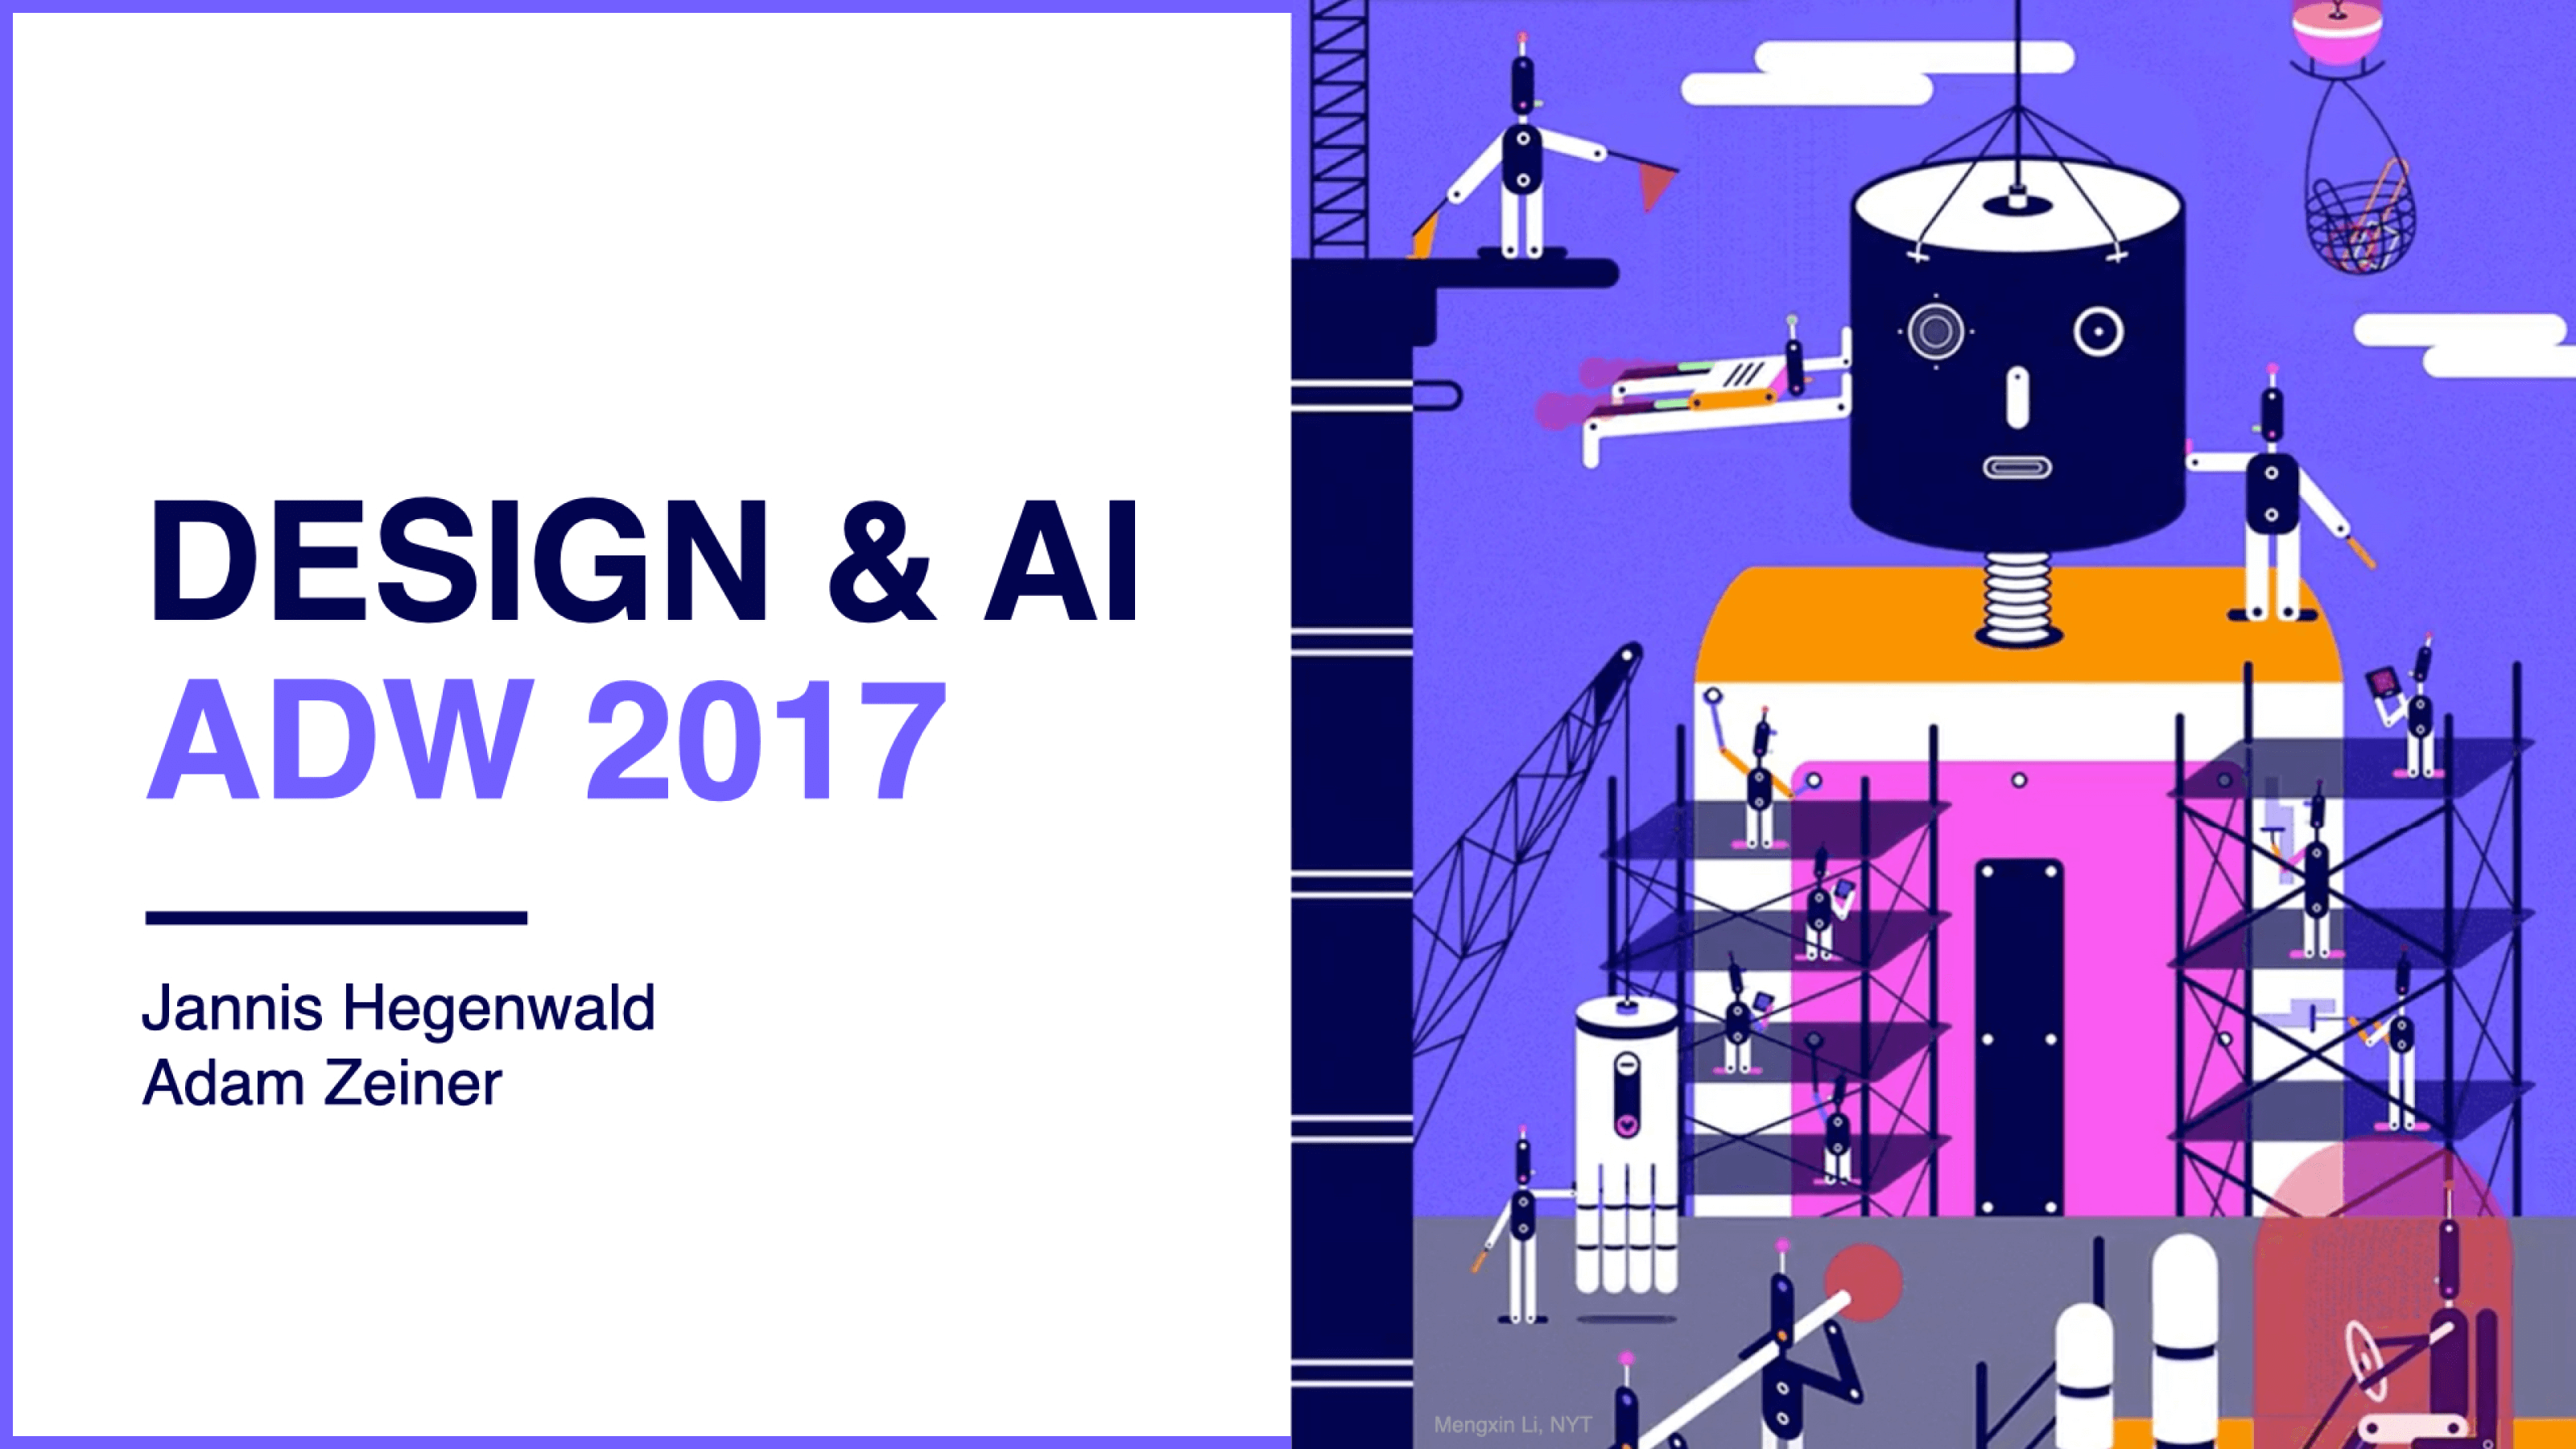 Design & AI